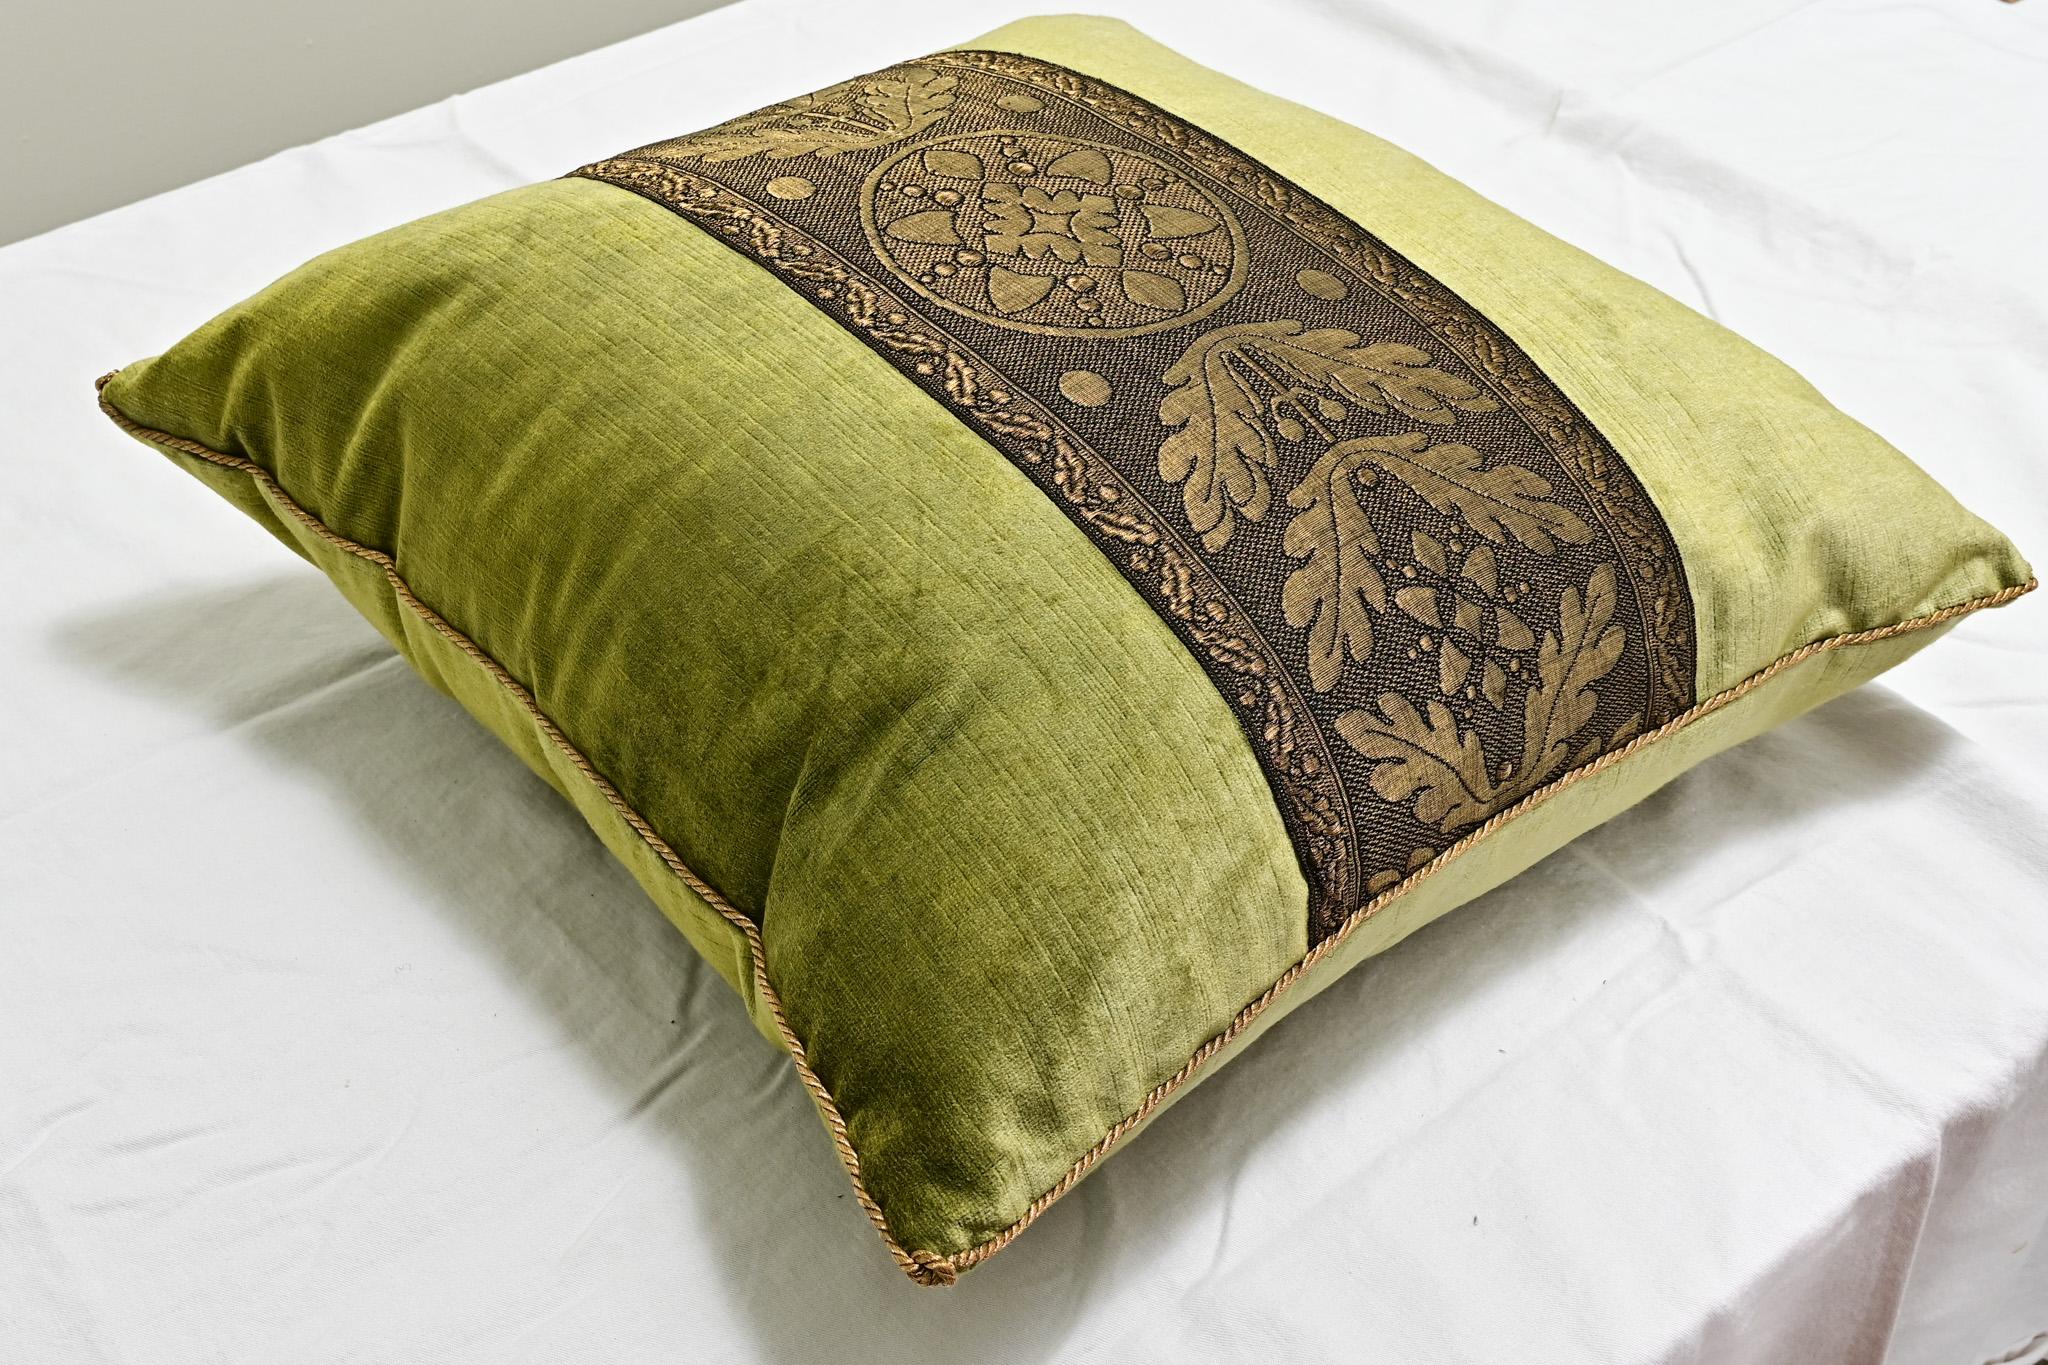 Hand-Woven B. Viz Antique Embroidery Pillow